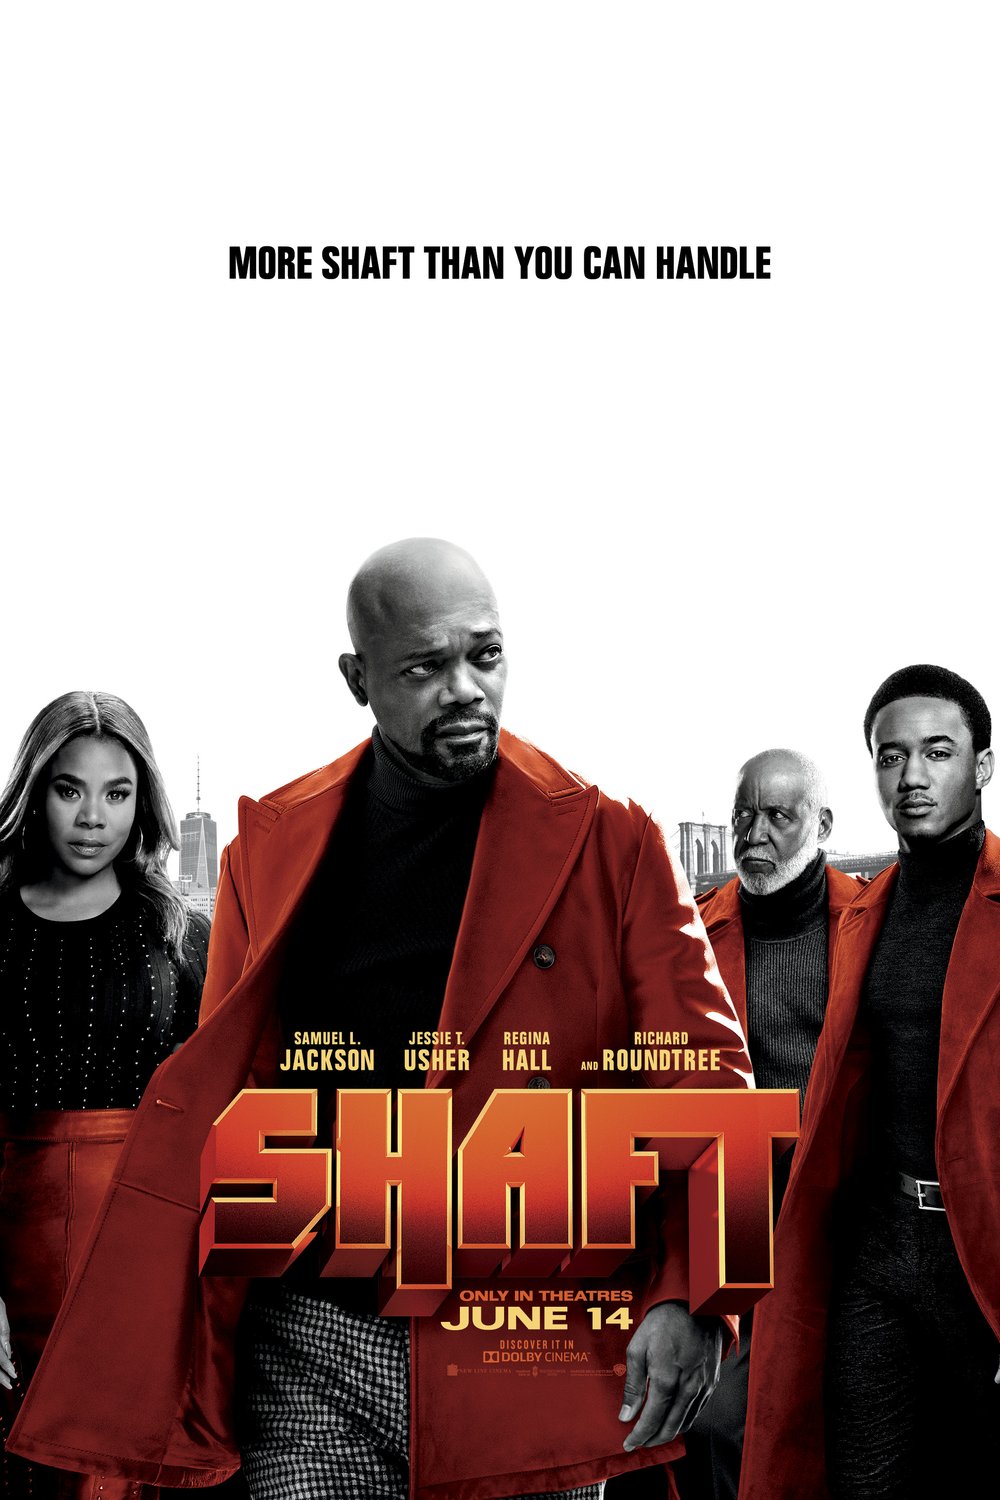 L'affiche du film Shaft